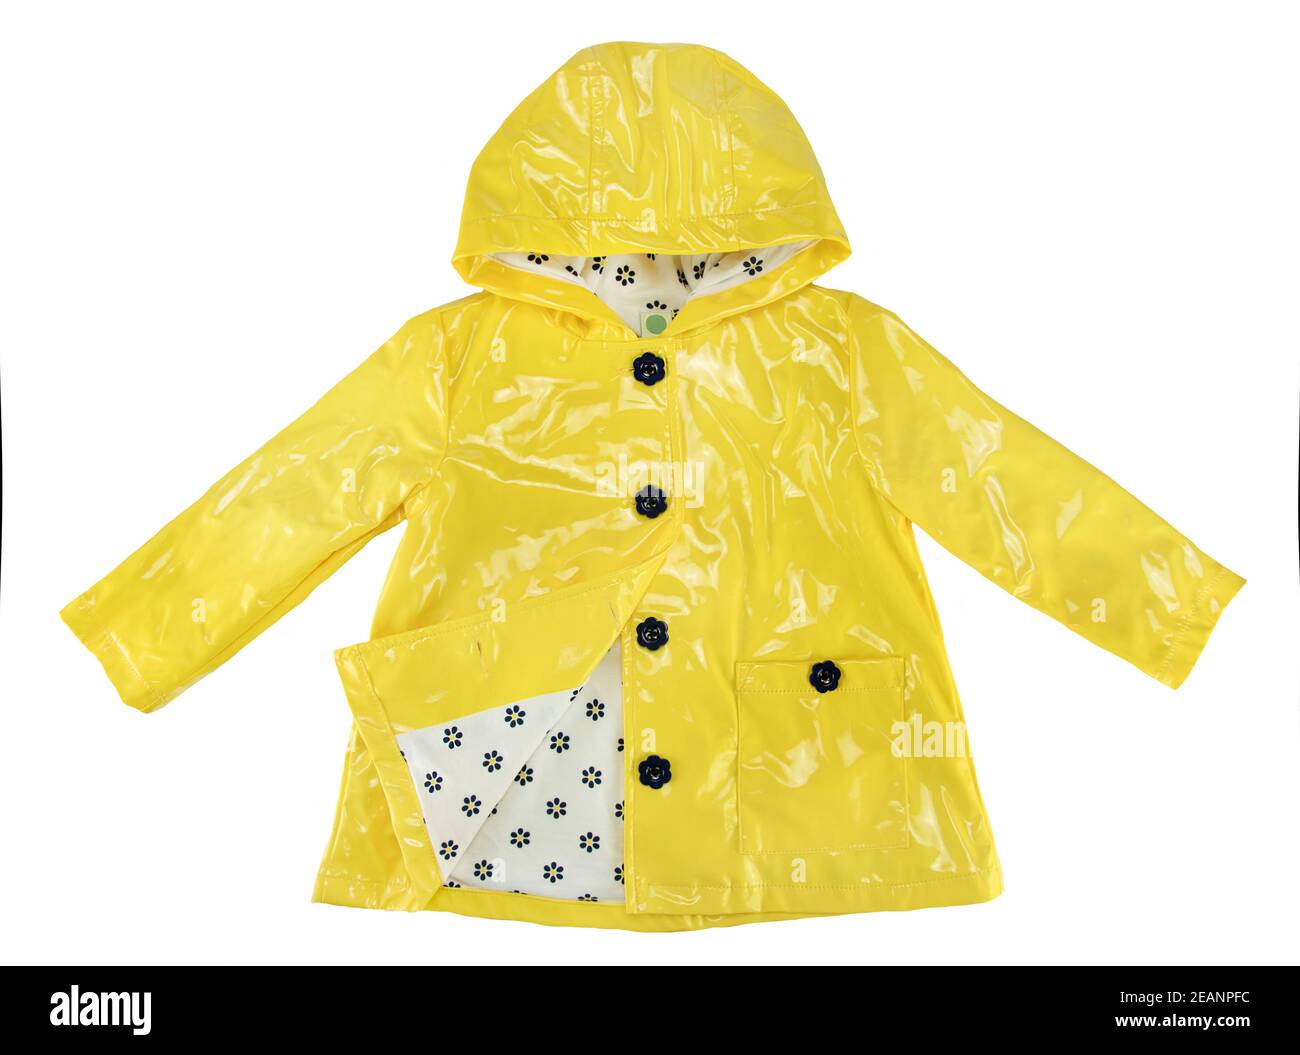 Rain jacket. Girls elegant yellow rain jacket isolated on a white background. Fashion for rain season. Stock Photo